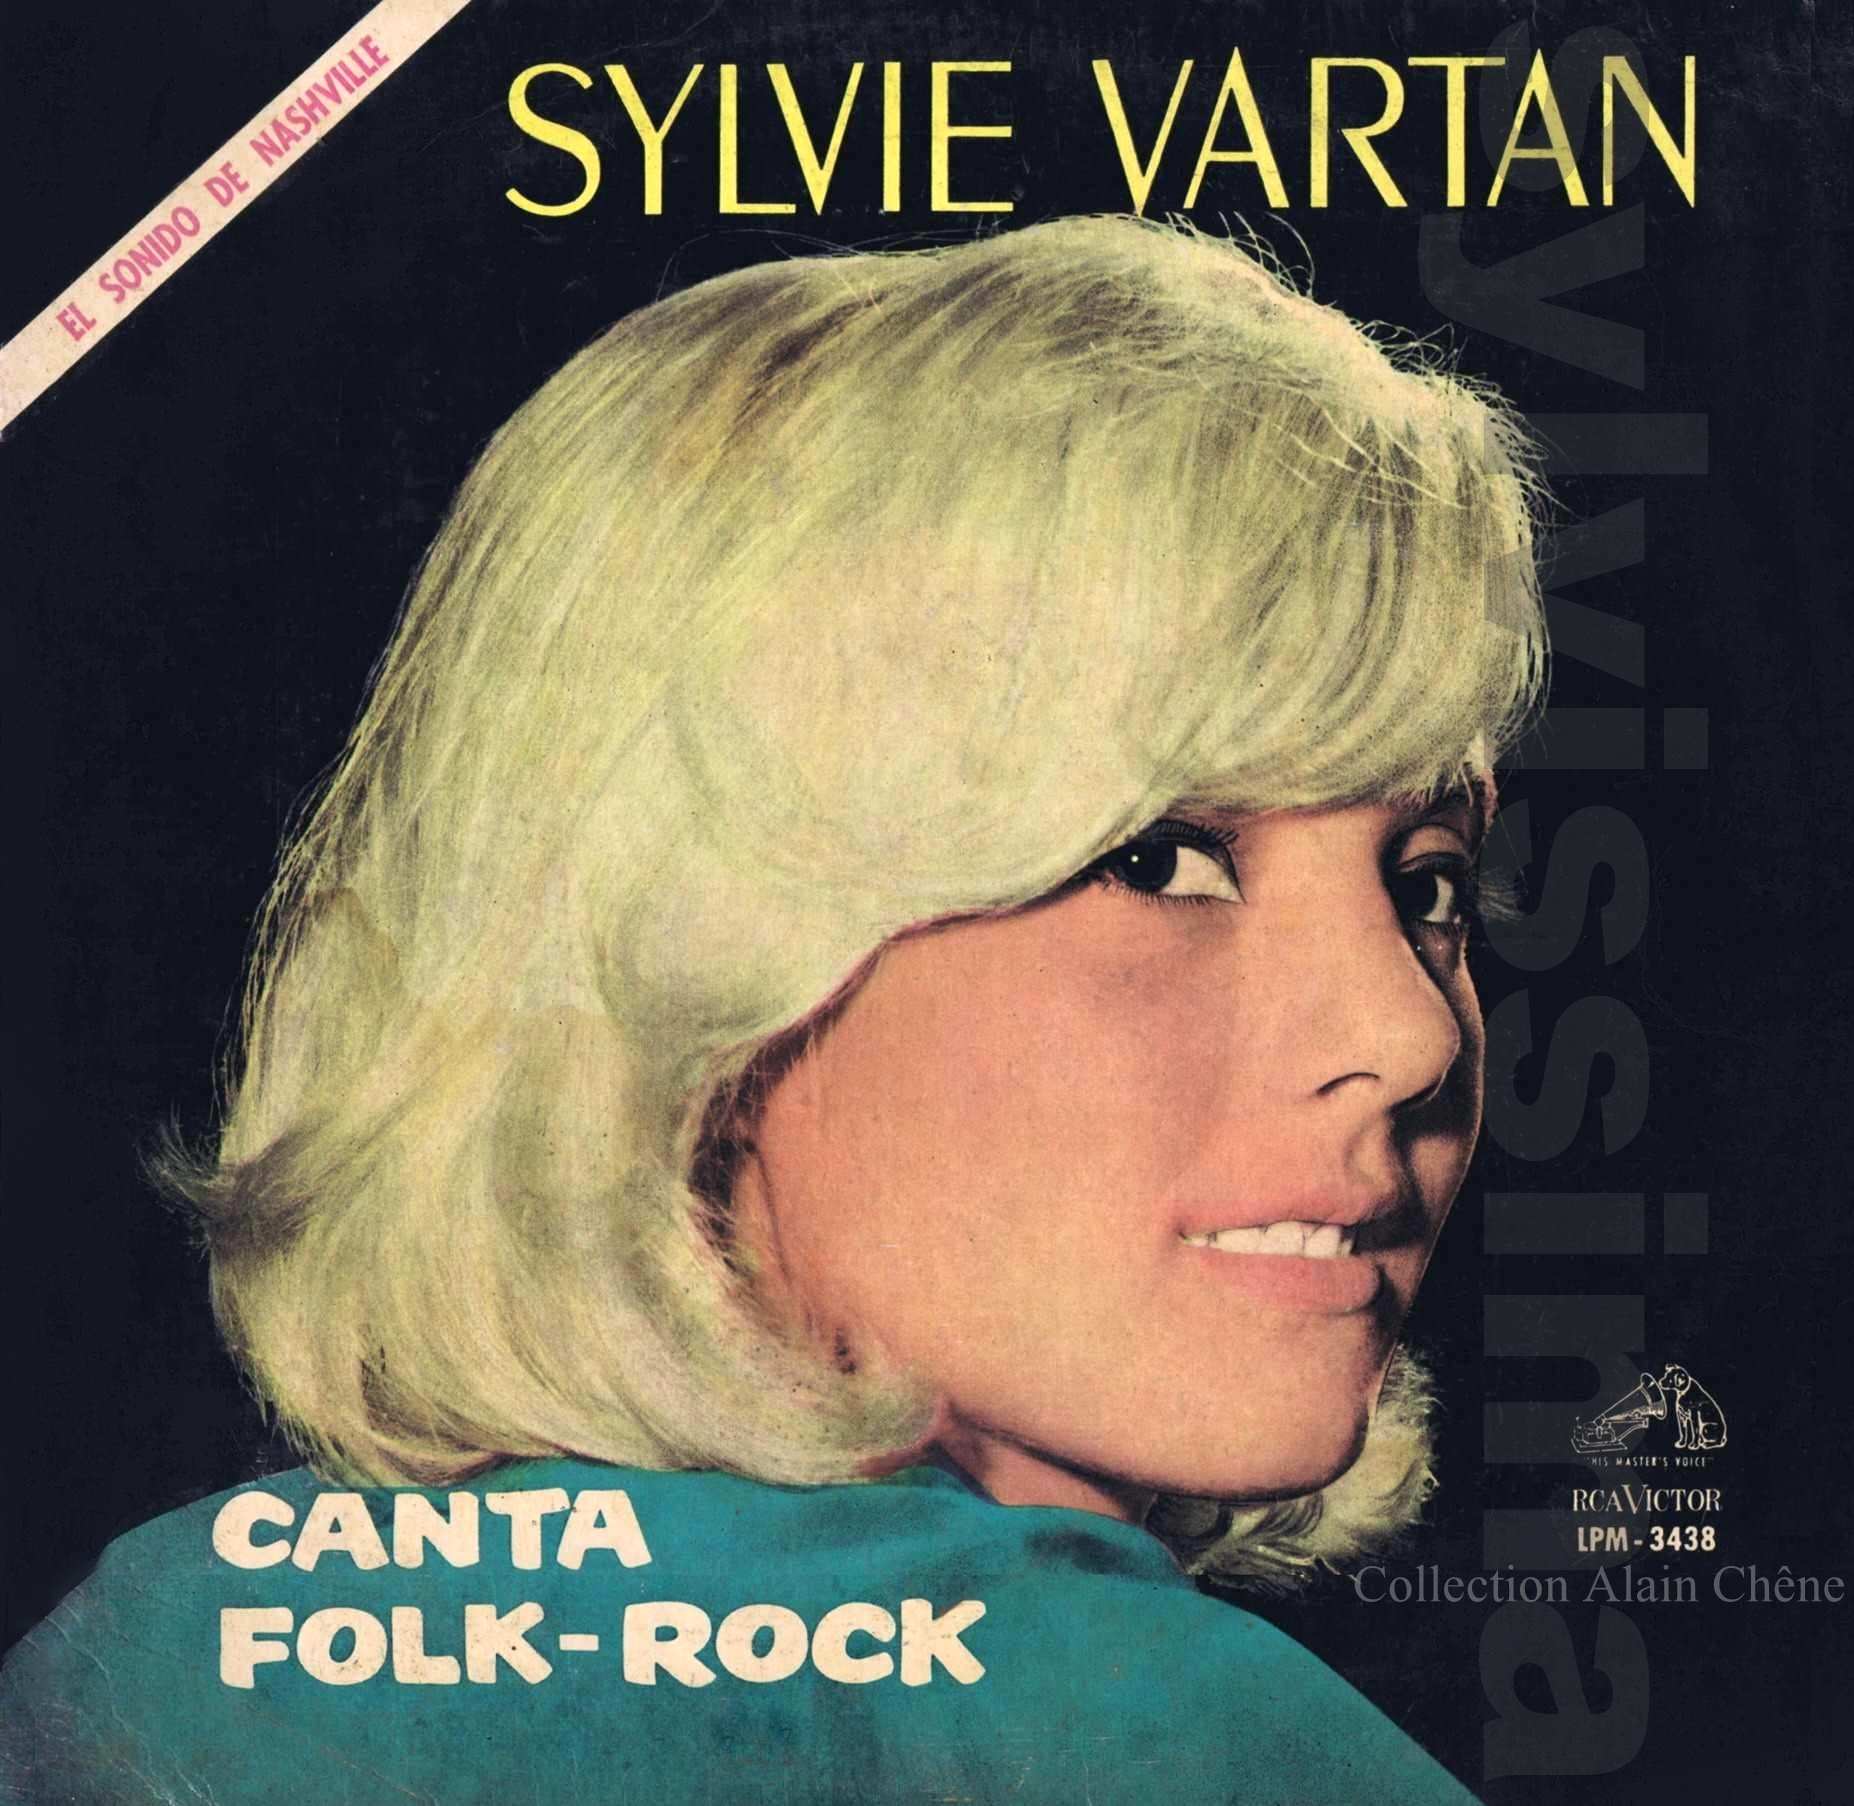 Sylvie Vartan   LP Uruguay "Sylvie Vartan canta folk-rock"  RCA VICTOR M 3438 (1965)